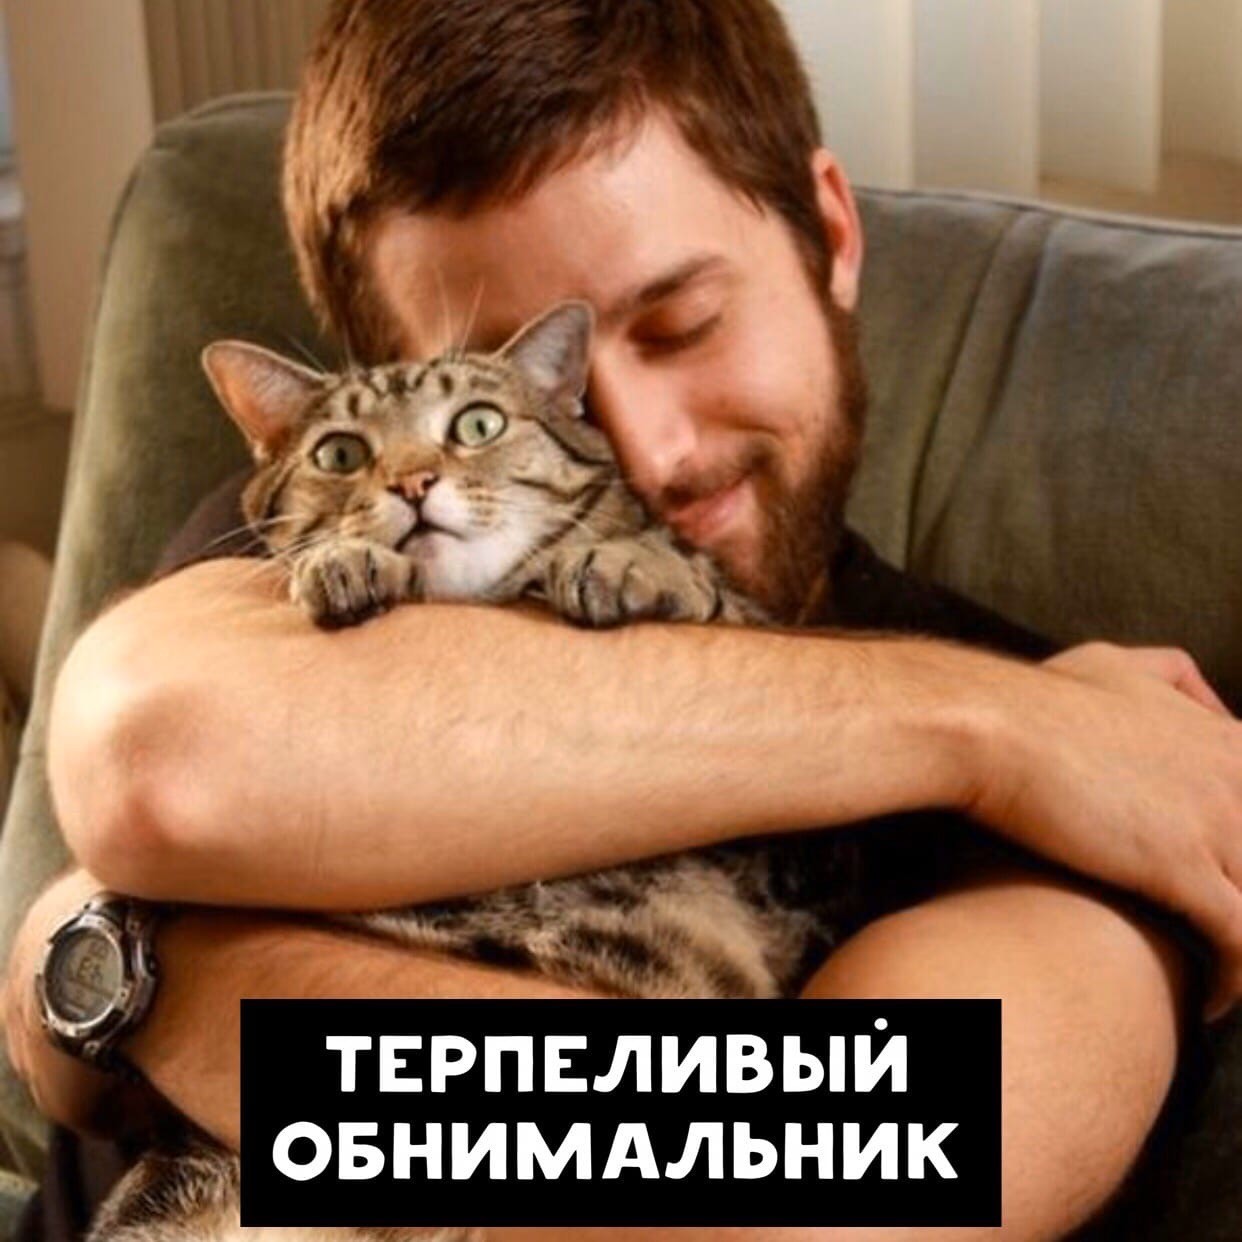 Мужчина любящие кошек. Кот обнимает. Мужчина обнимает кота. Человек обнимает. Кот обнимает человека.